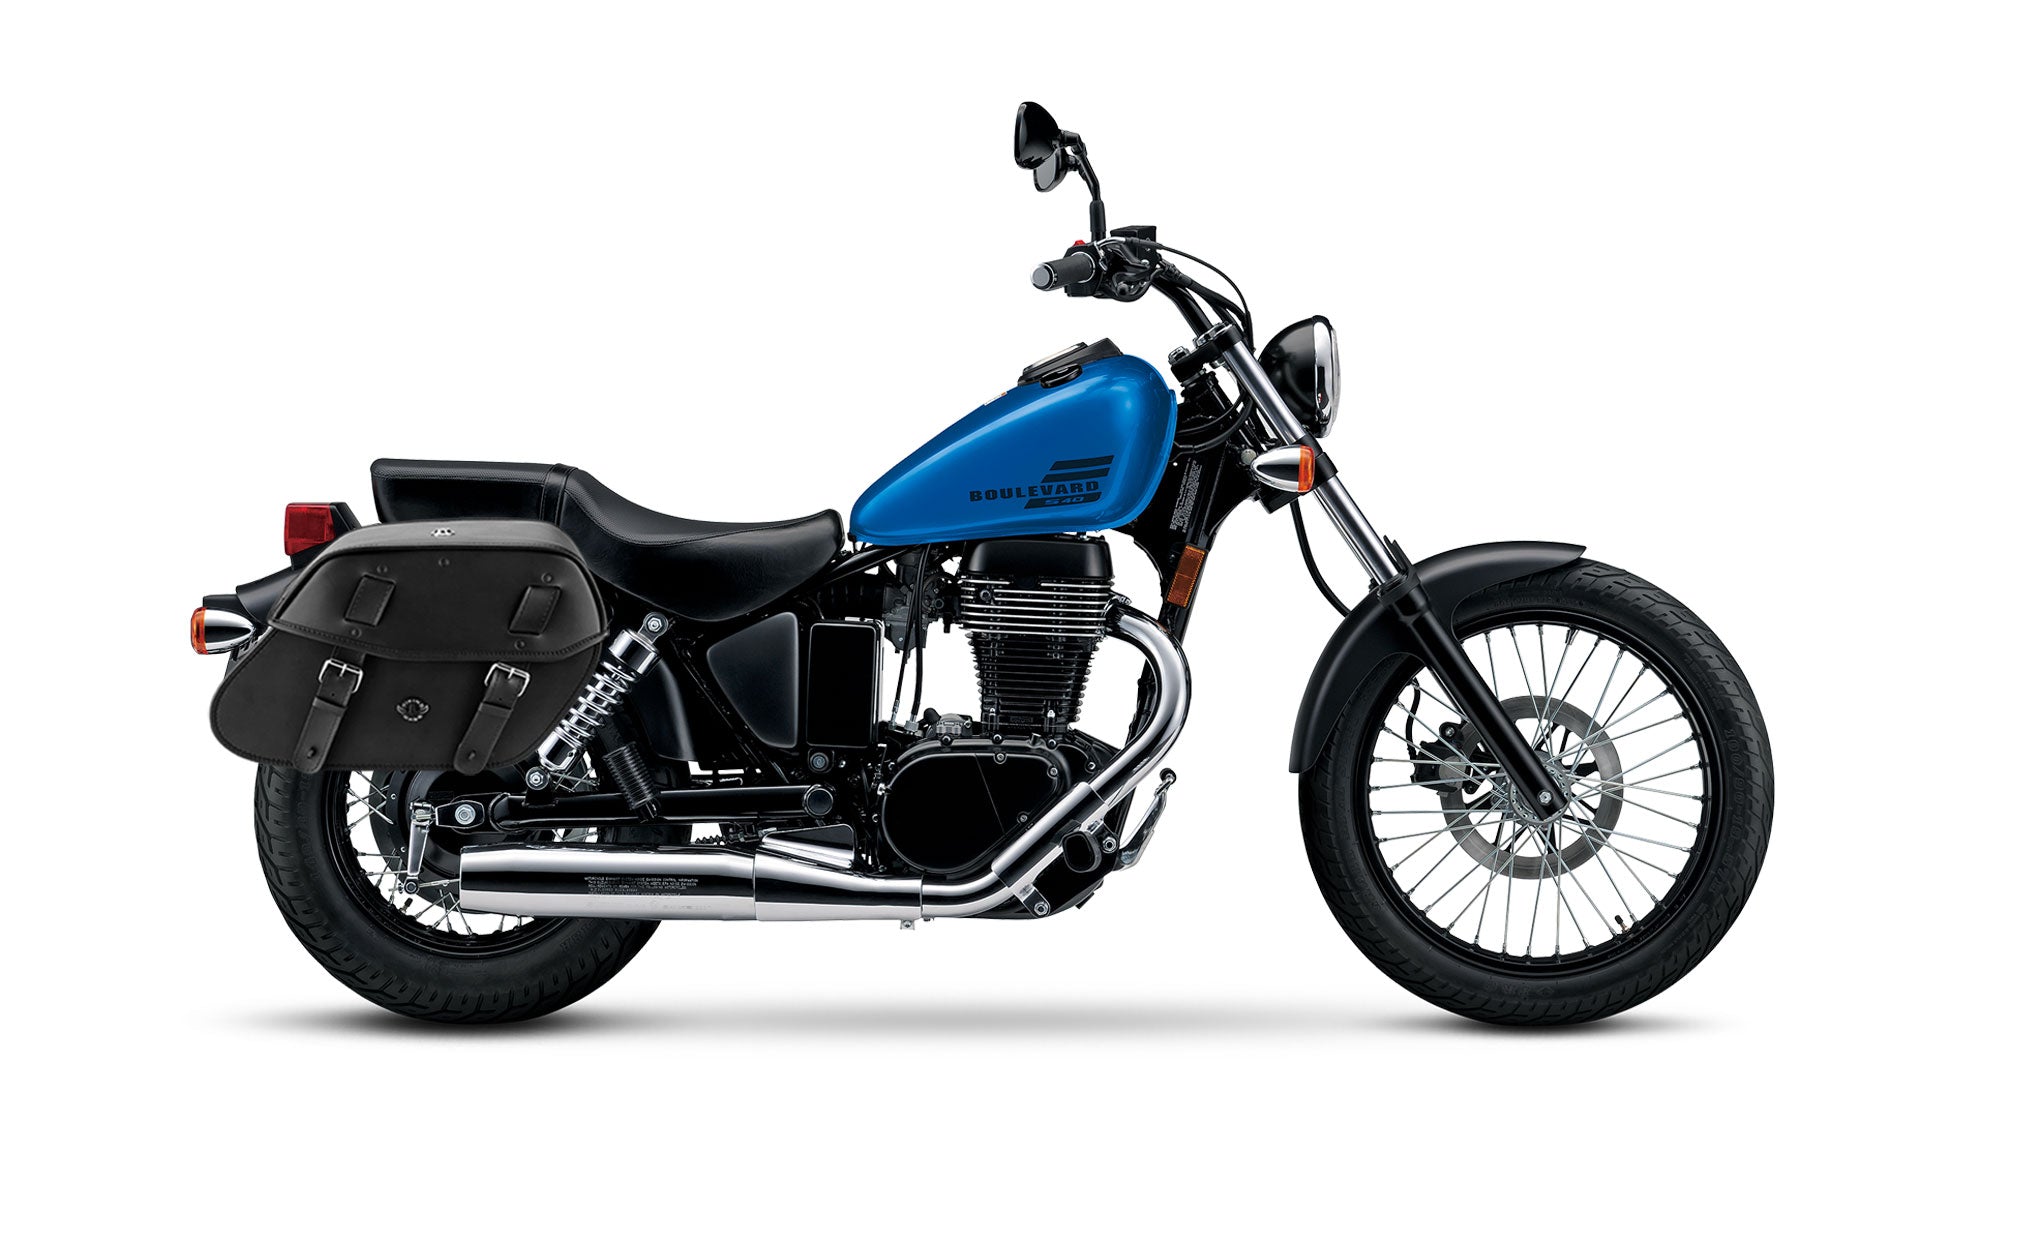 Viking Odin Large Suzuki Boulevard S40 Savage Ls650 Leather Motorcycle Saddlebags on Bike Photo @expand